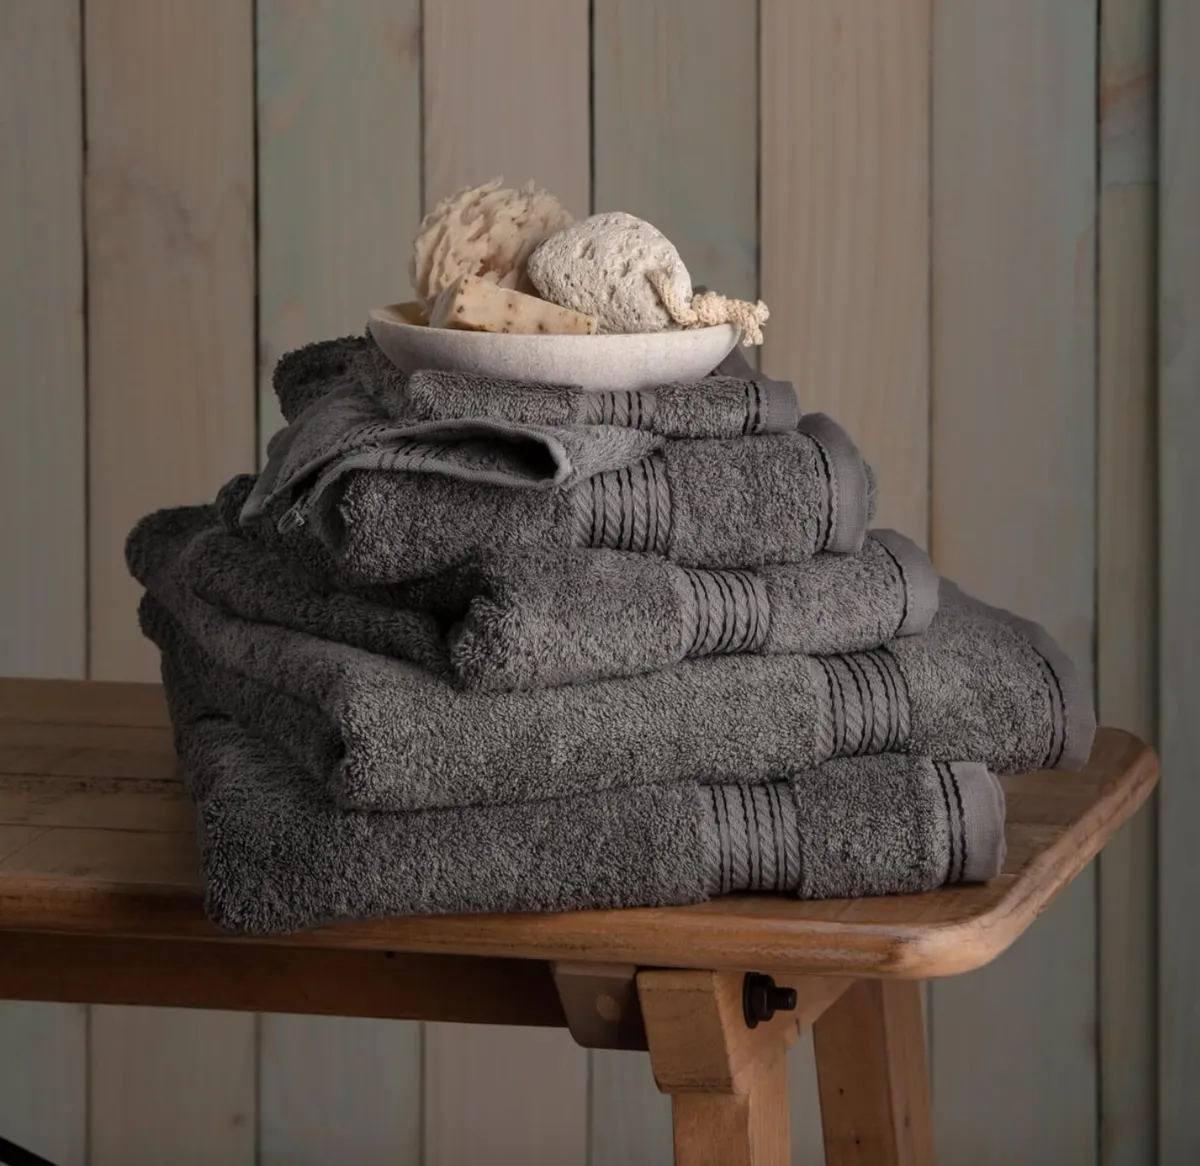 Bathroom Washcloths, Luxury Natural Cotton